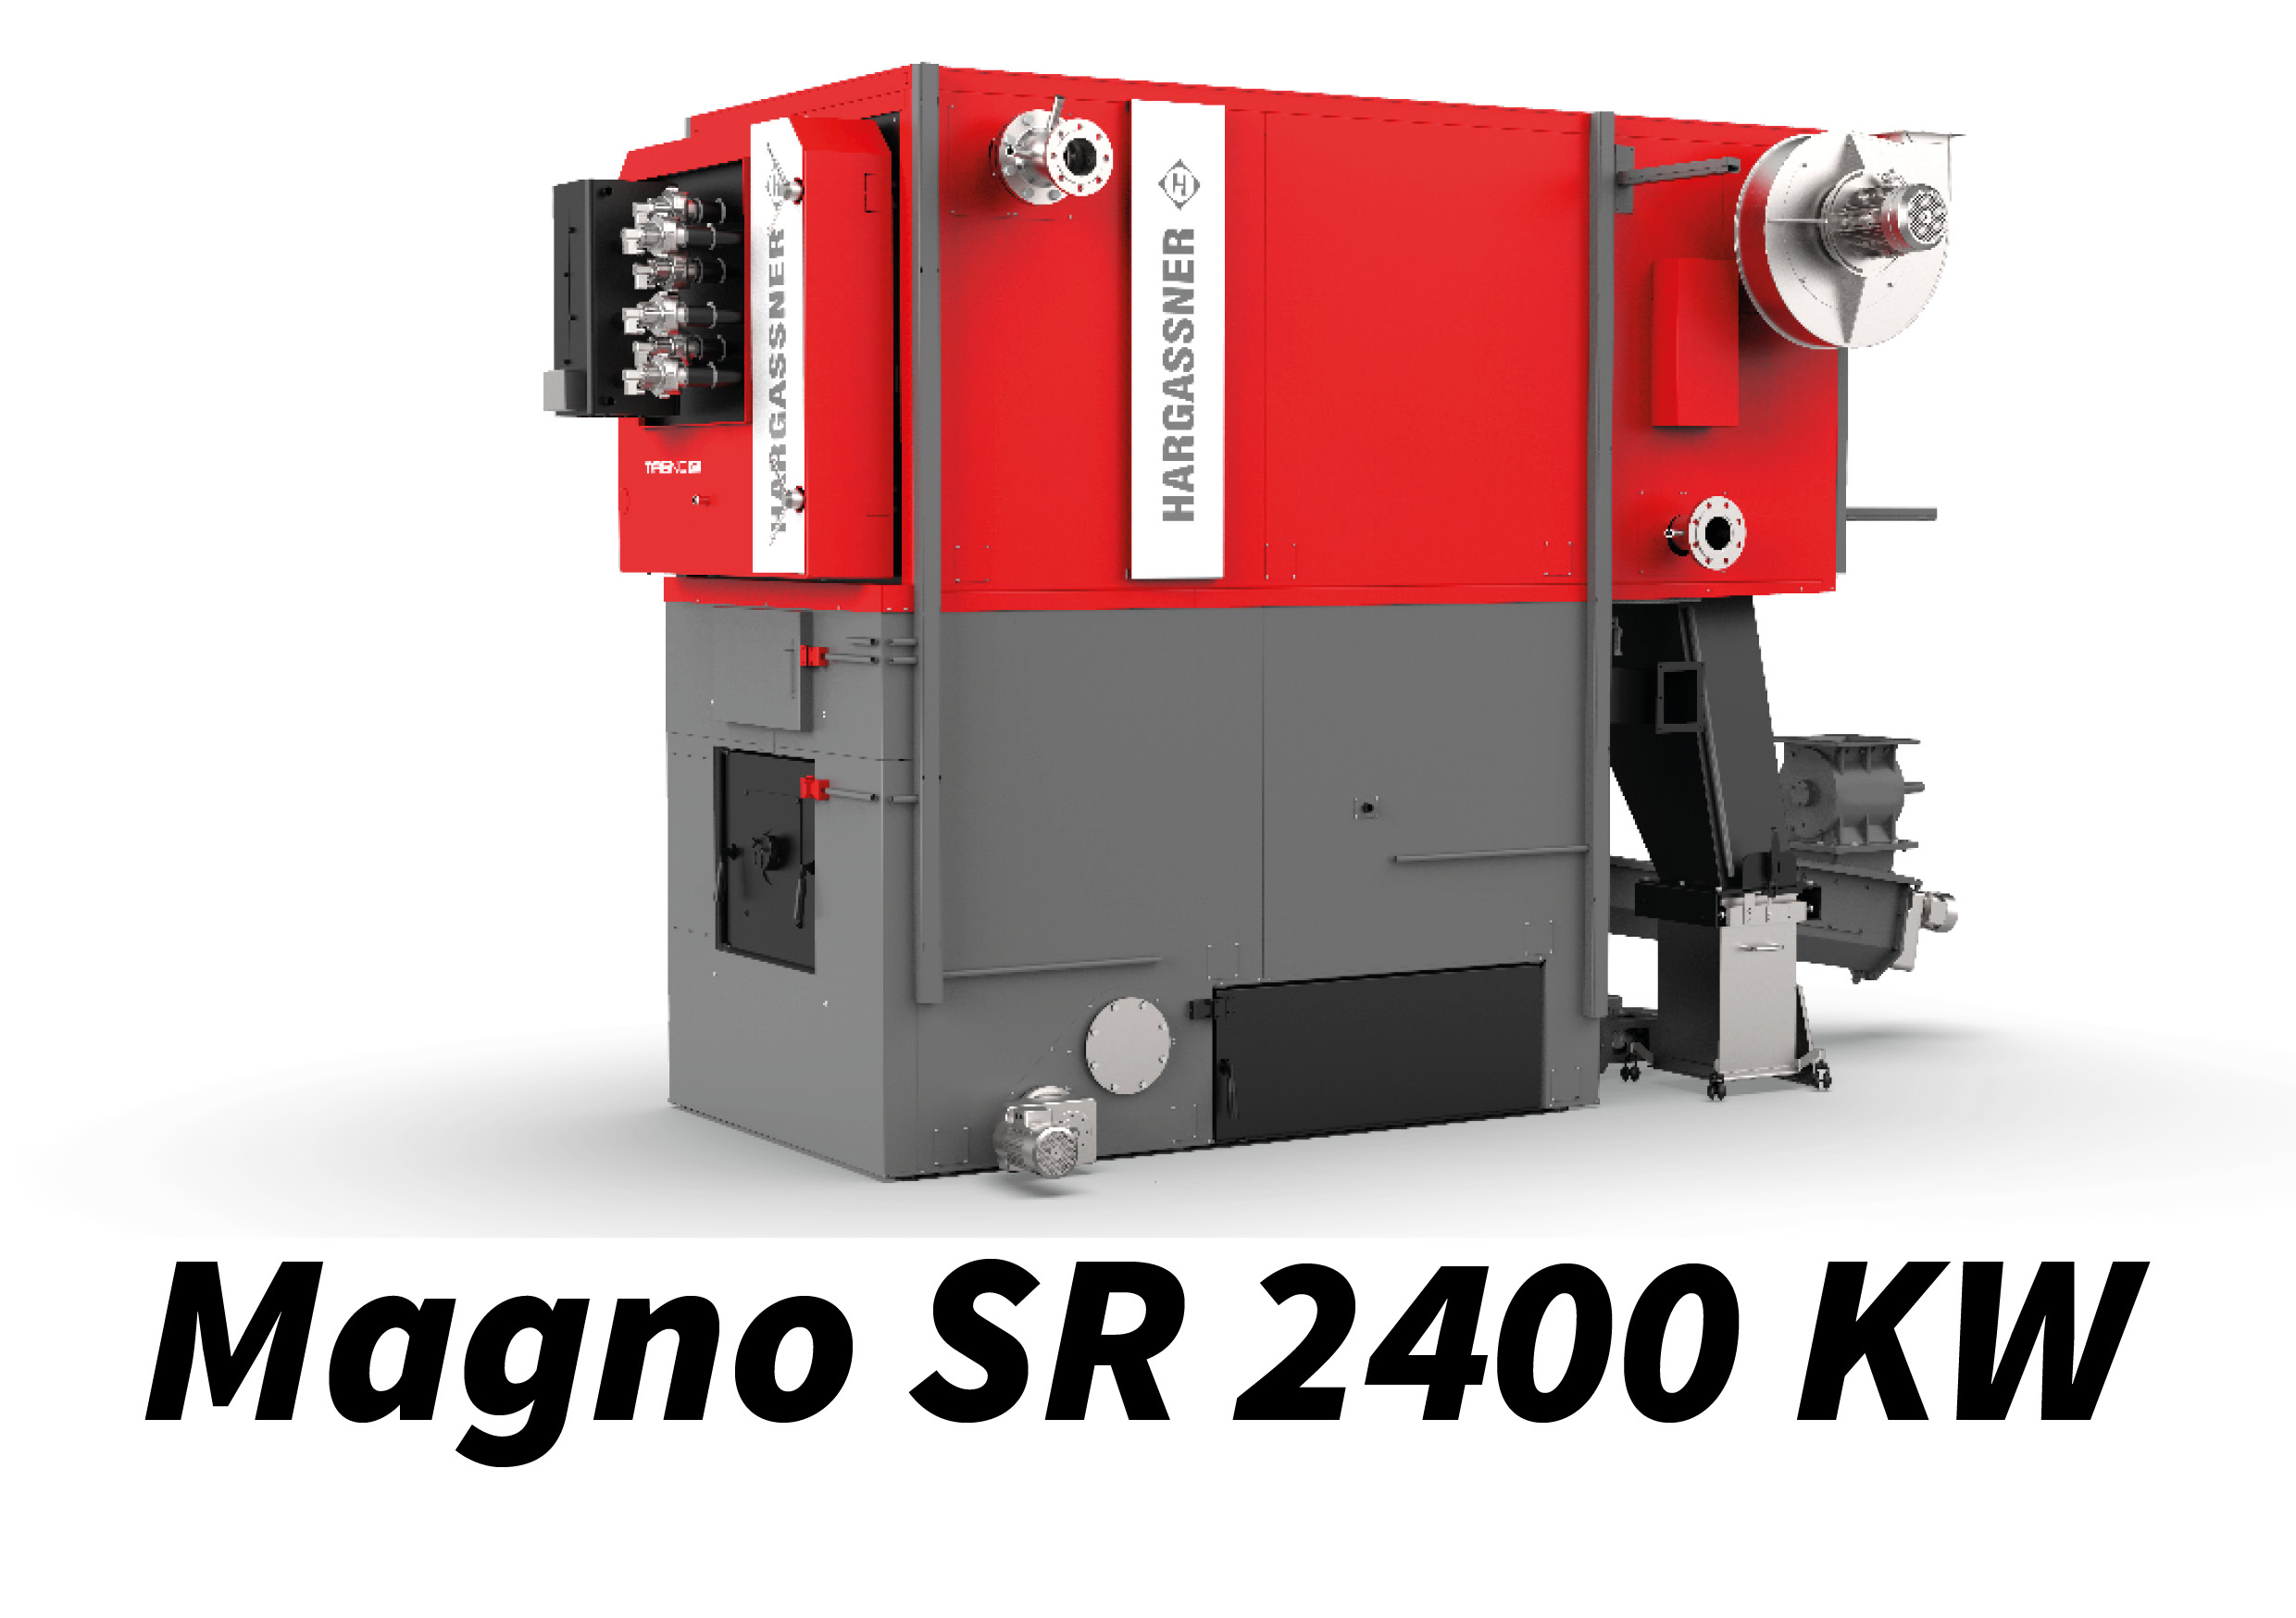 Magno SR 2400 kW